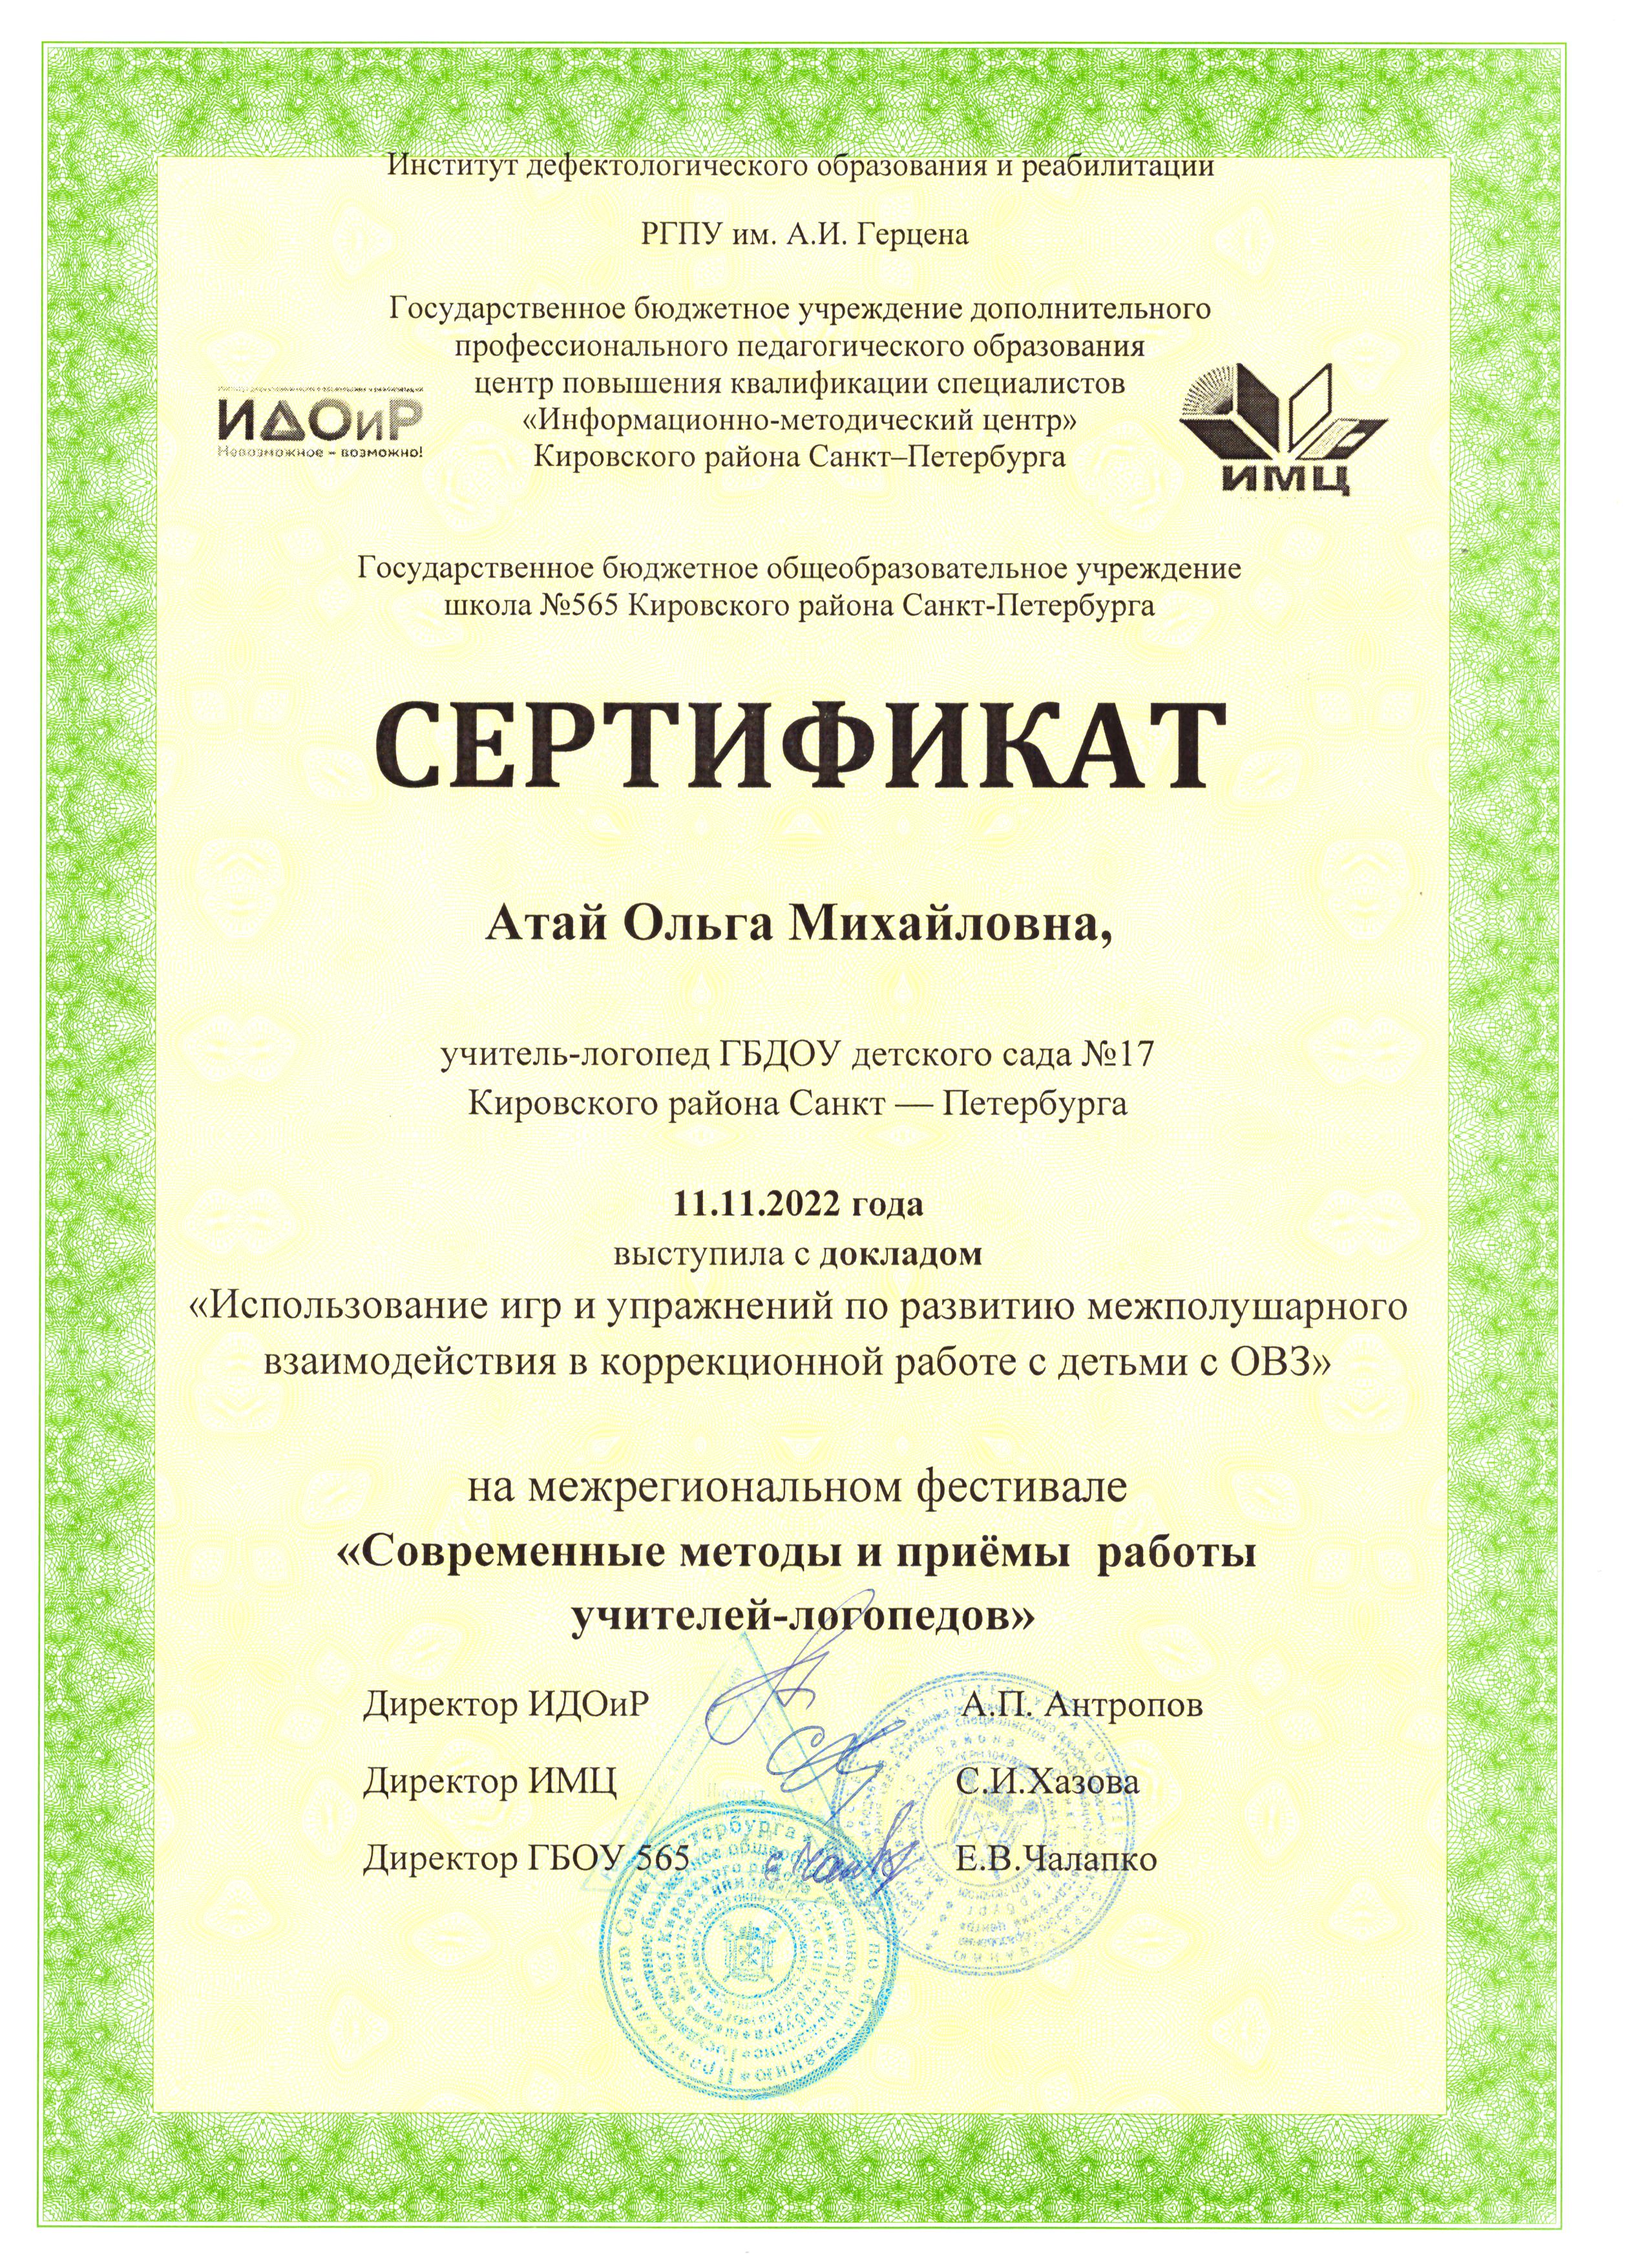 Сертификат Атай 001.jpg